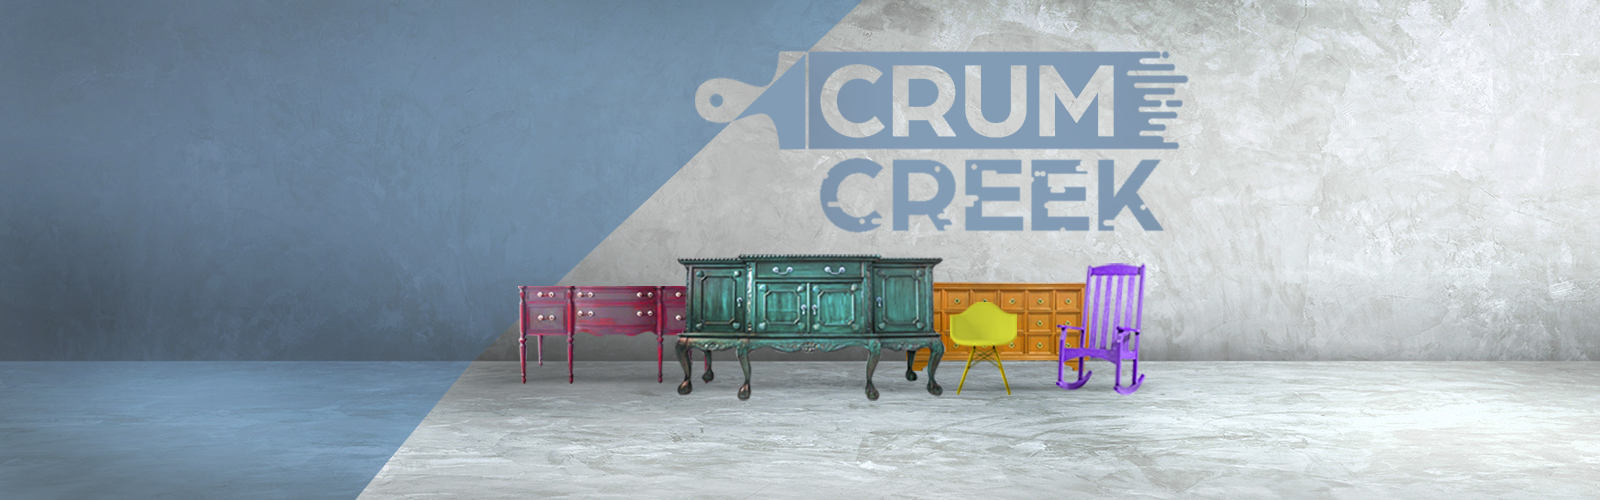 Crum Creek